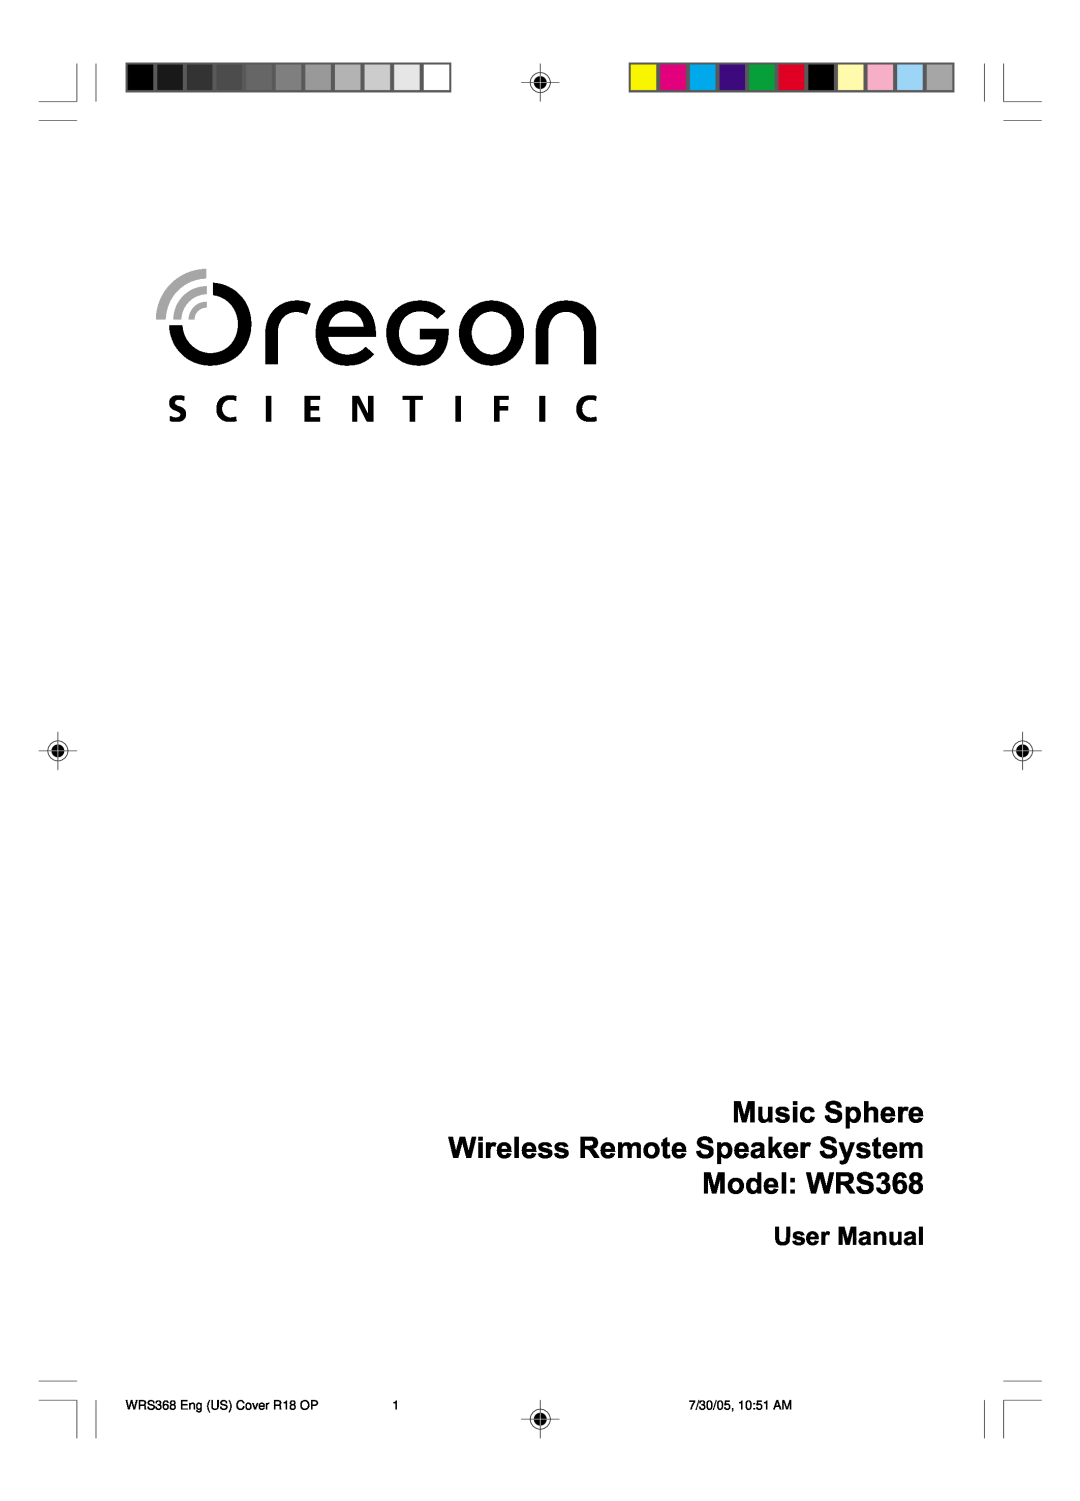 Oregon user manual Music Sphere Wireless Remote Speaker System, Model WRS368, WRS368 Eng US Cover R18 OP 